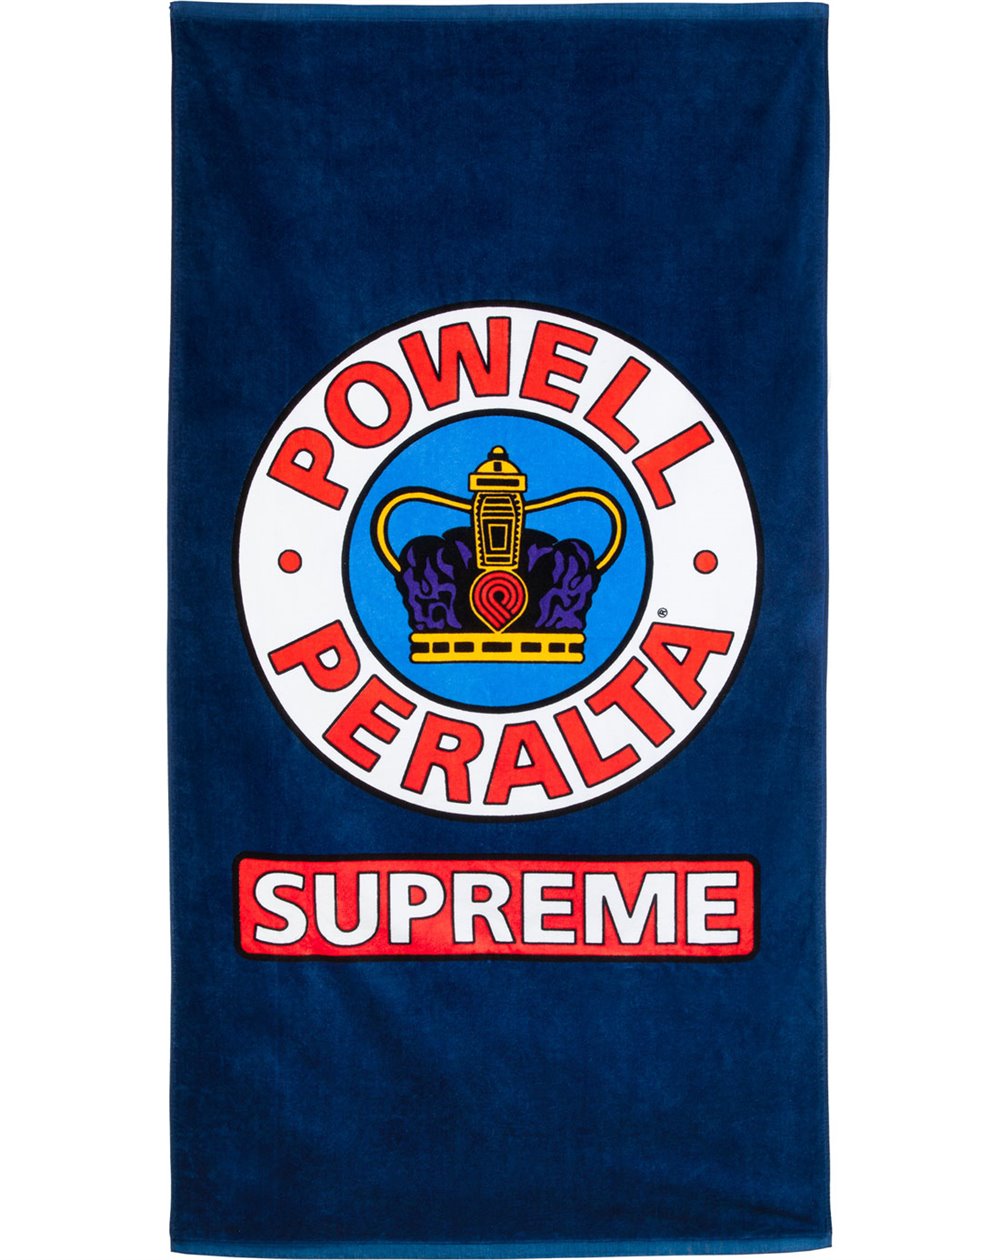 Powell Peralta Towel Supreme